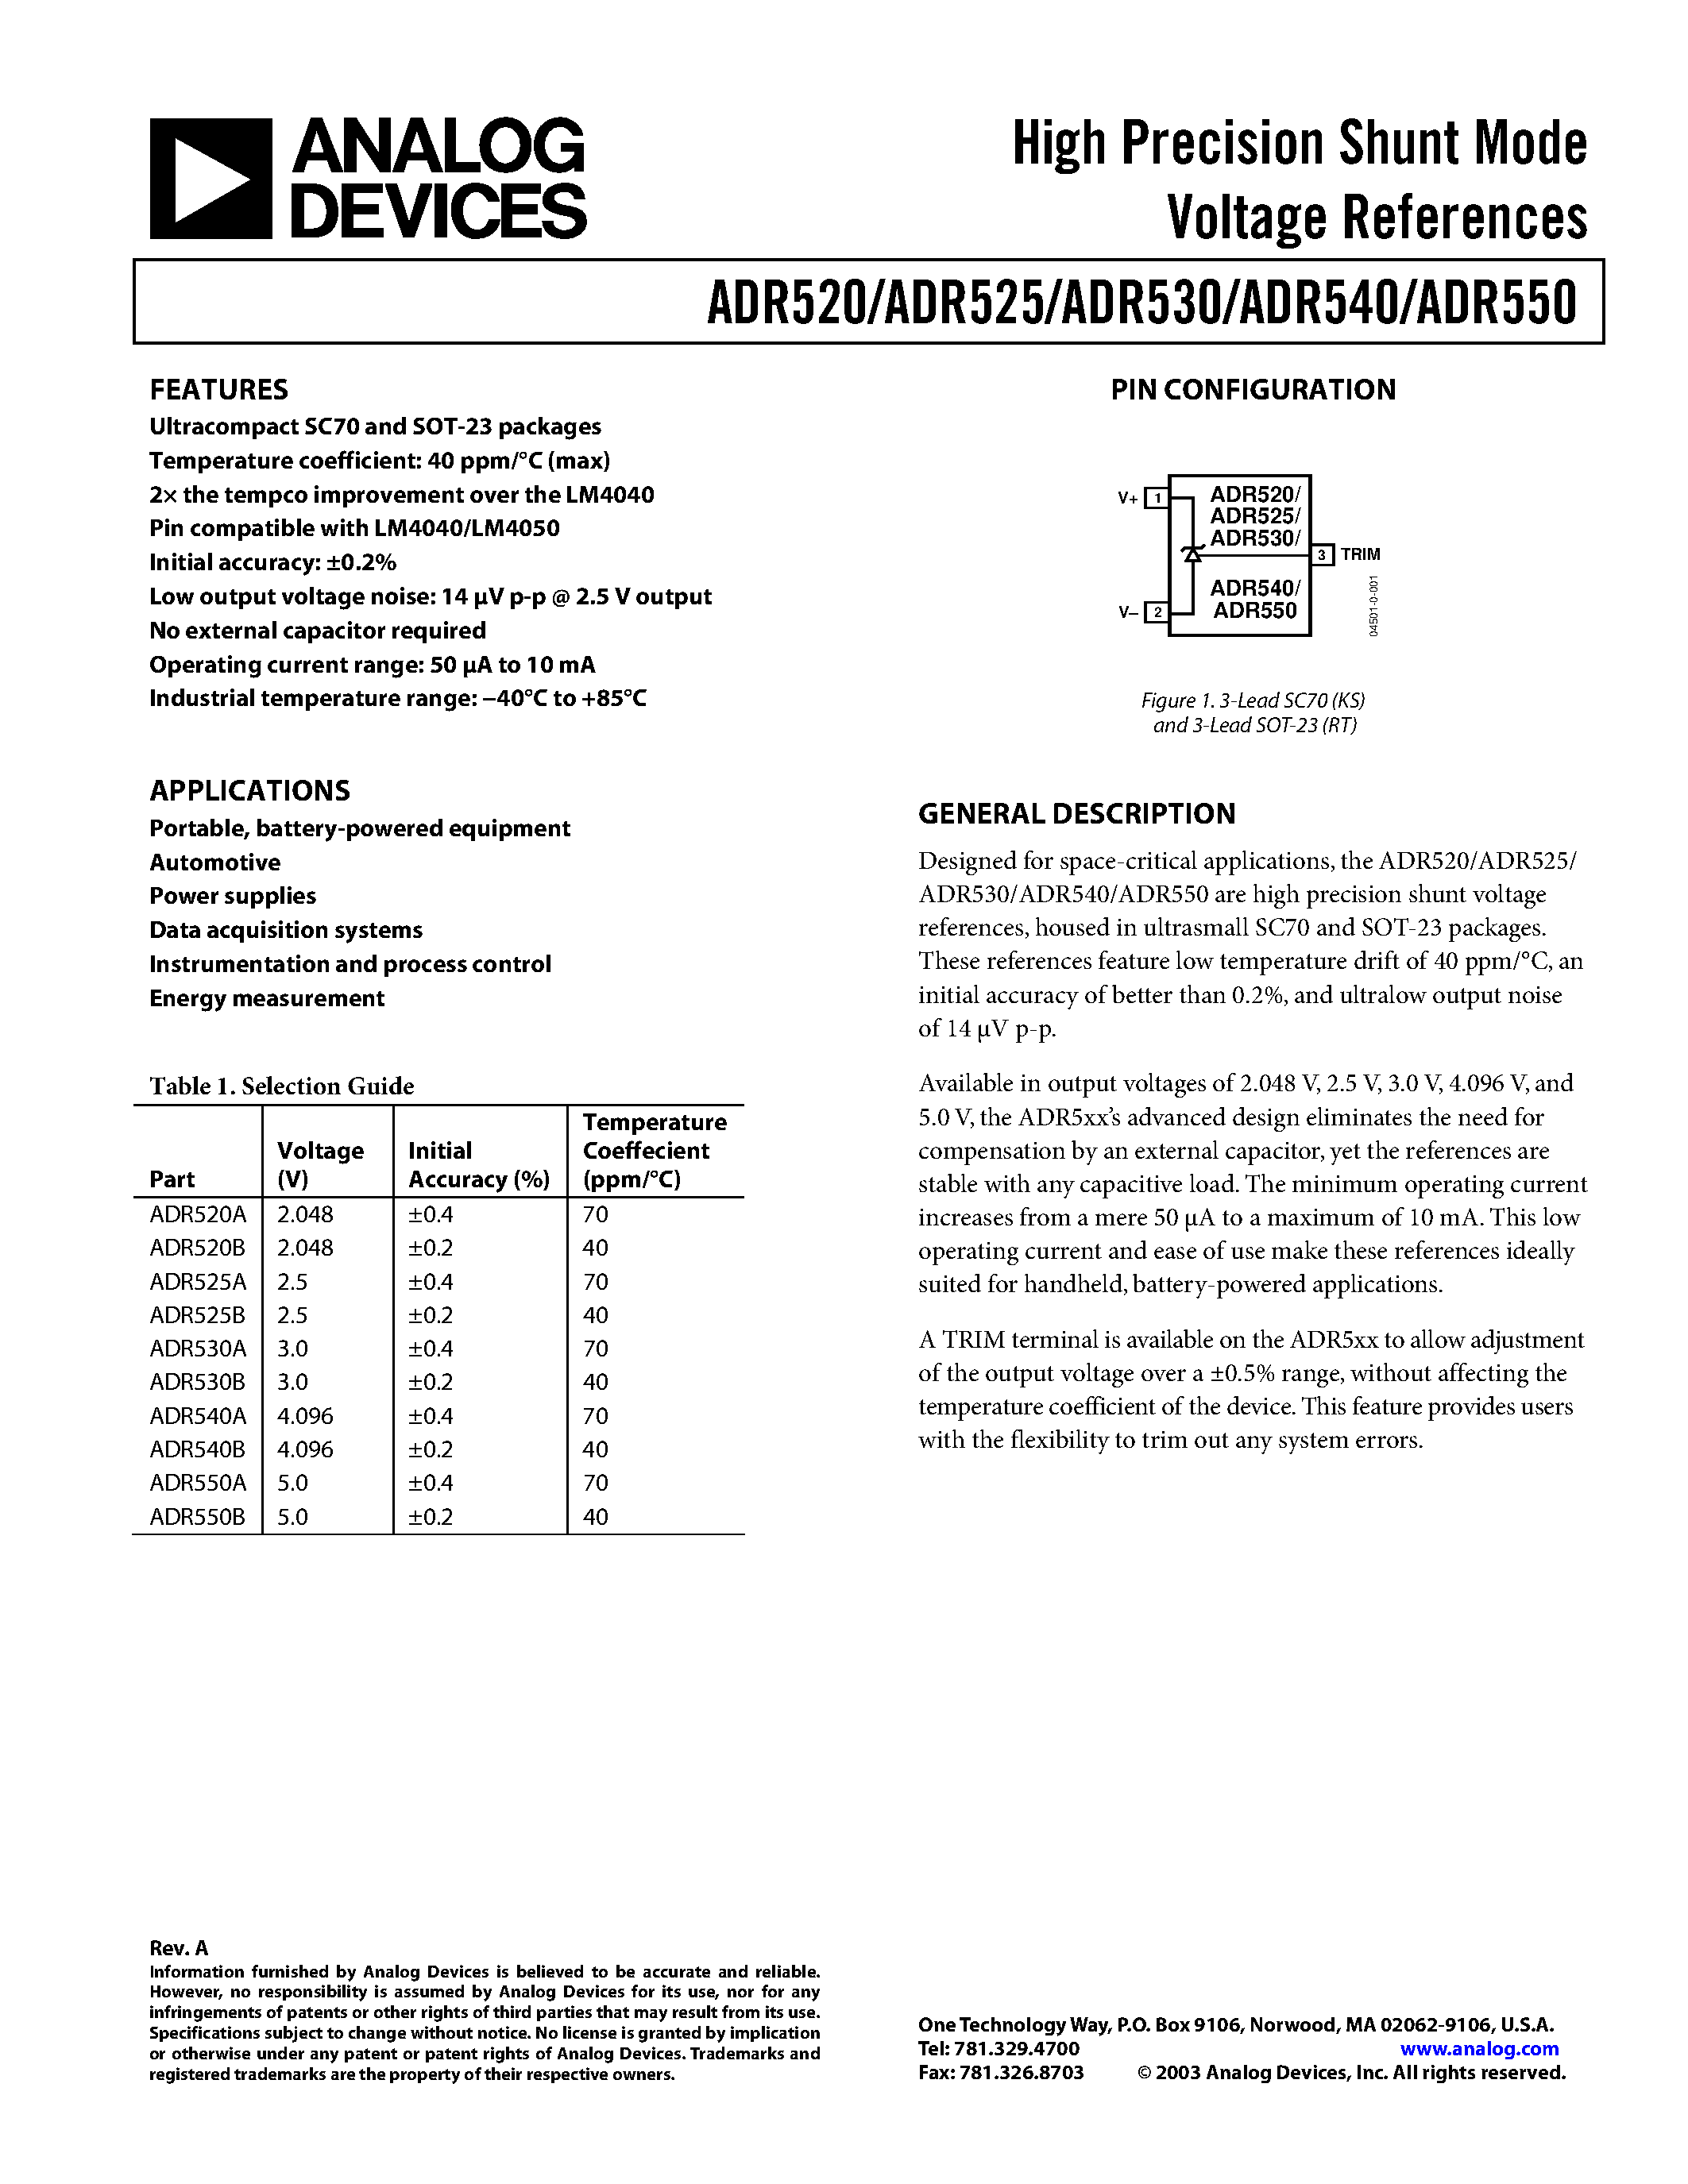 Даташит ADR550 - High Precision Shunt Mode Voltage References страница 1